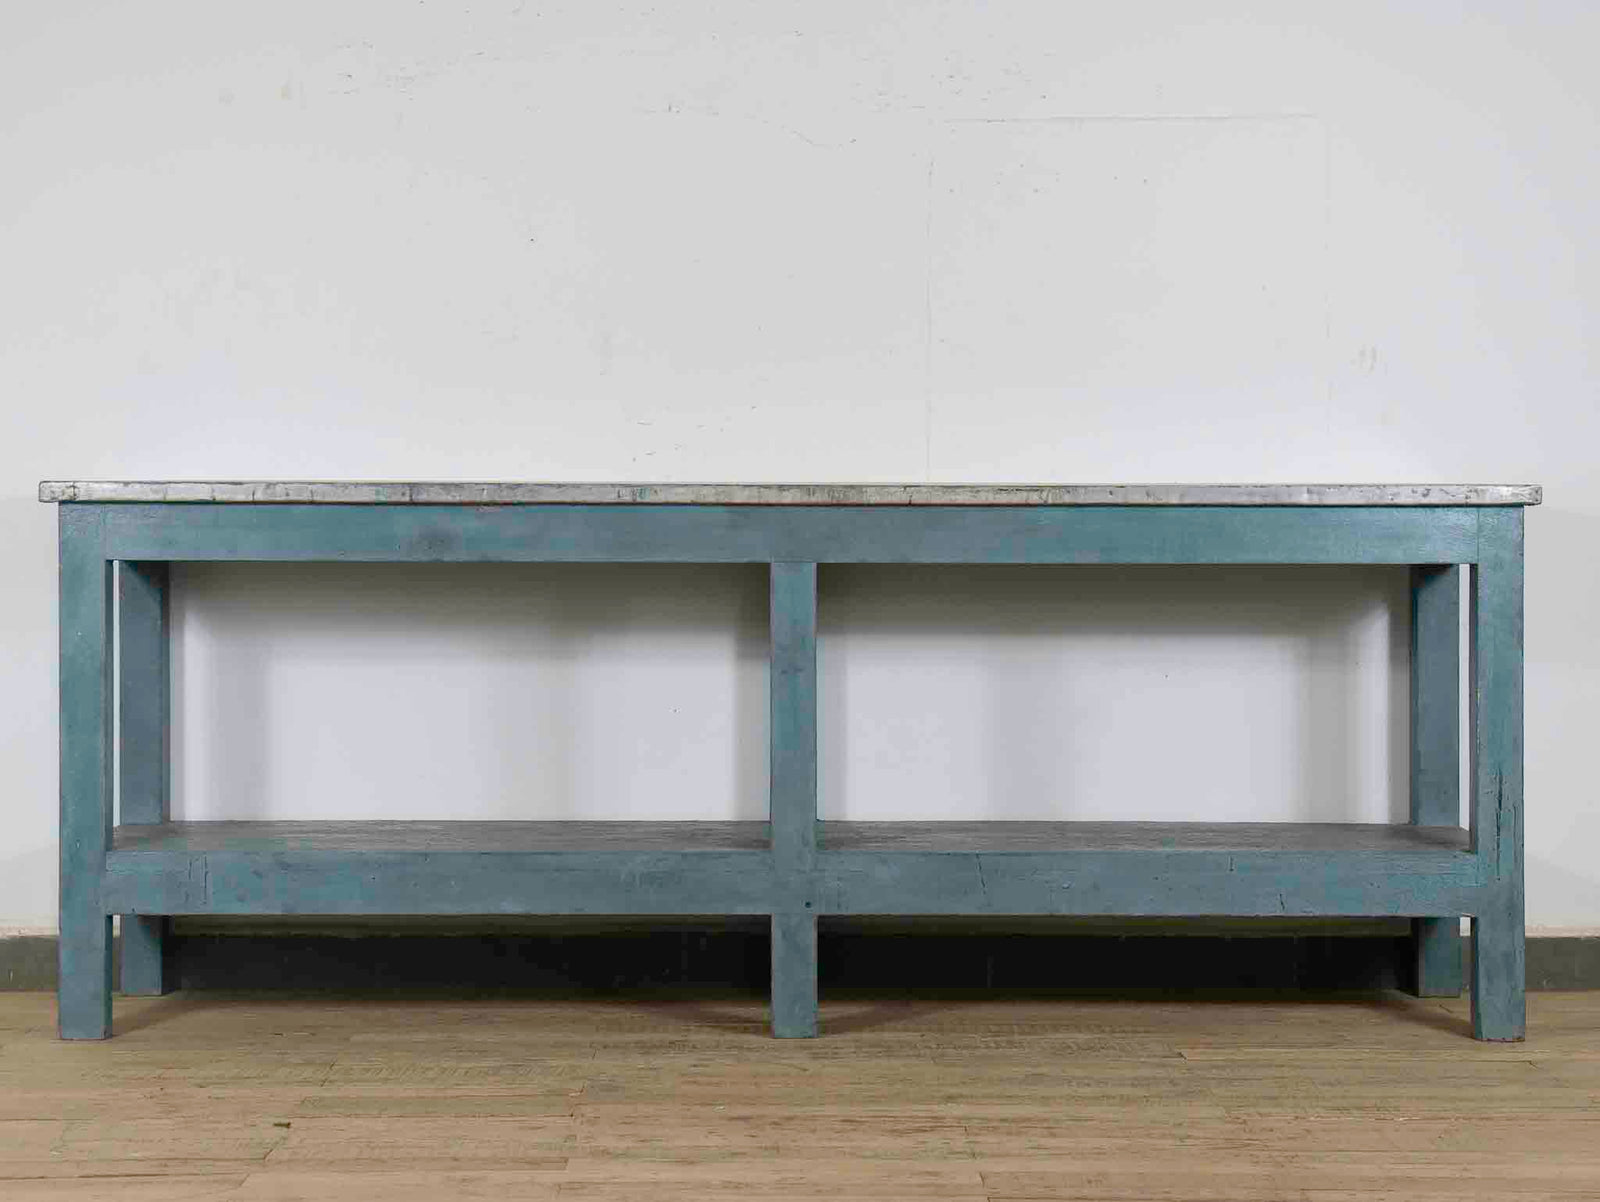 MILL-2280/1 XL Workbench Table C29